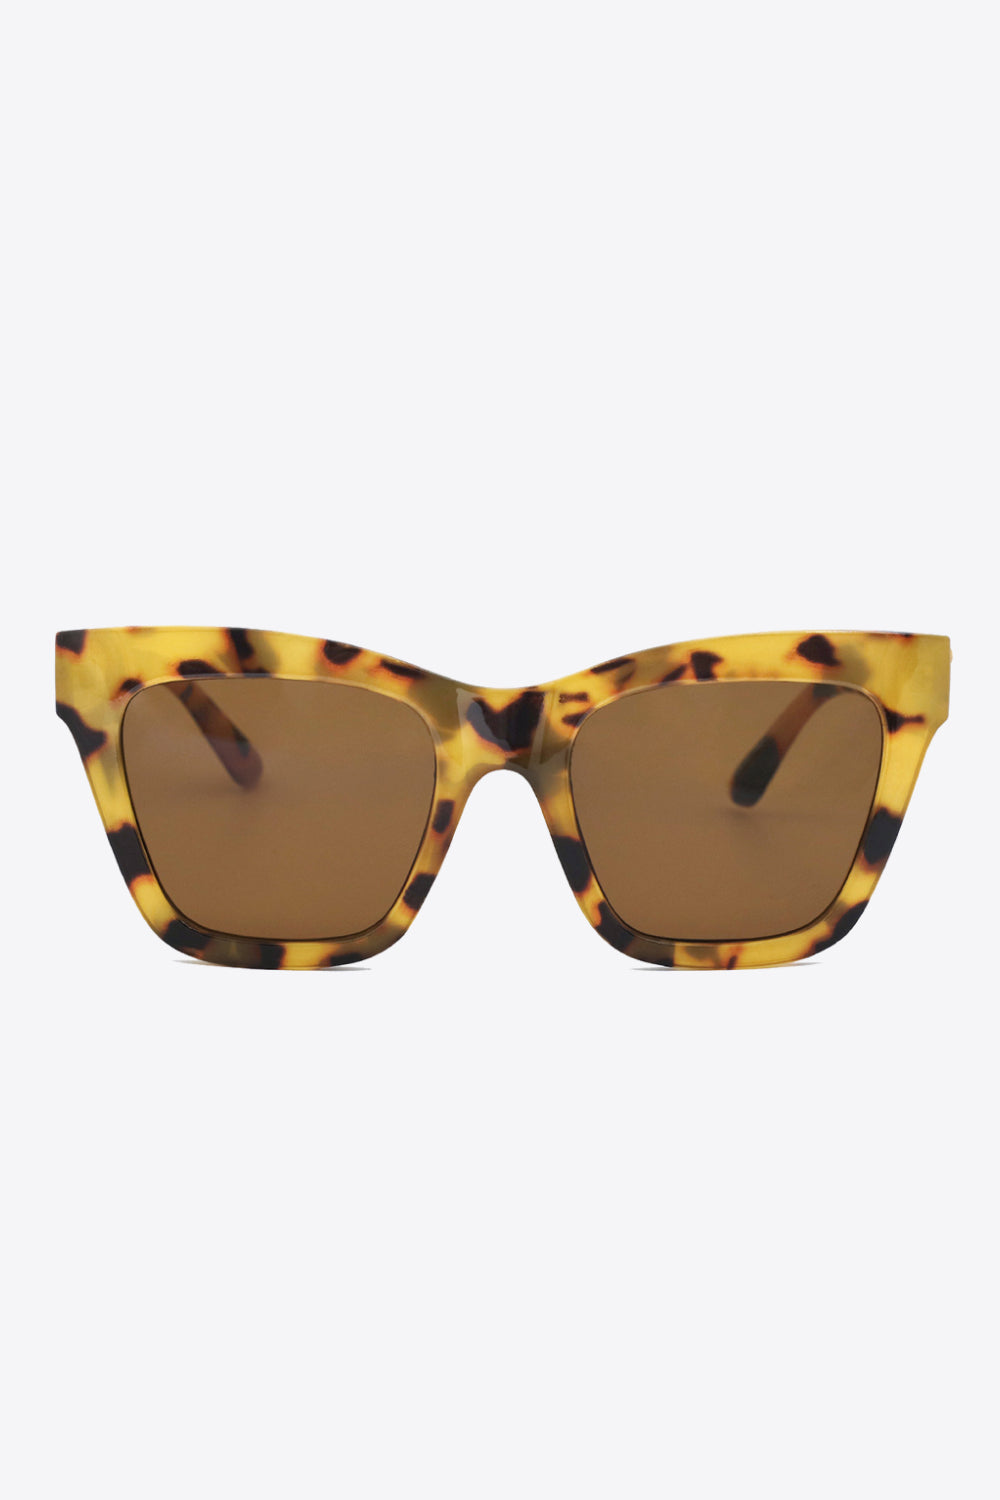 Palm Beach Sunglasses